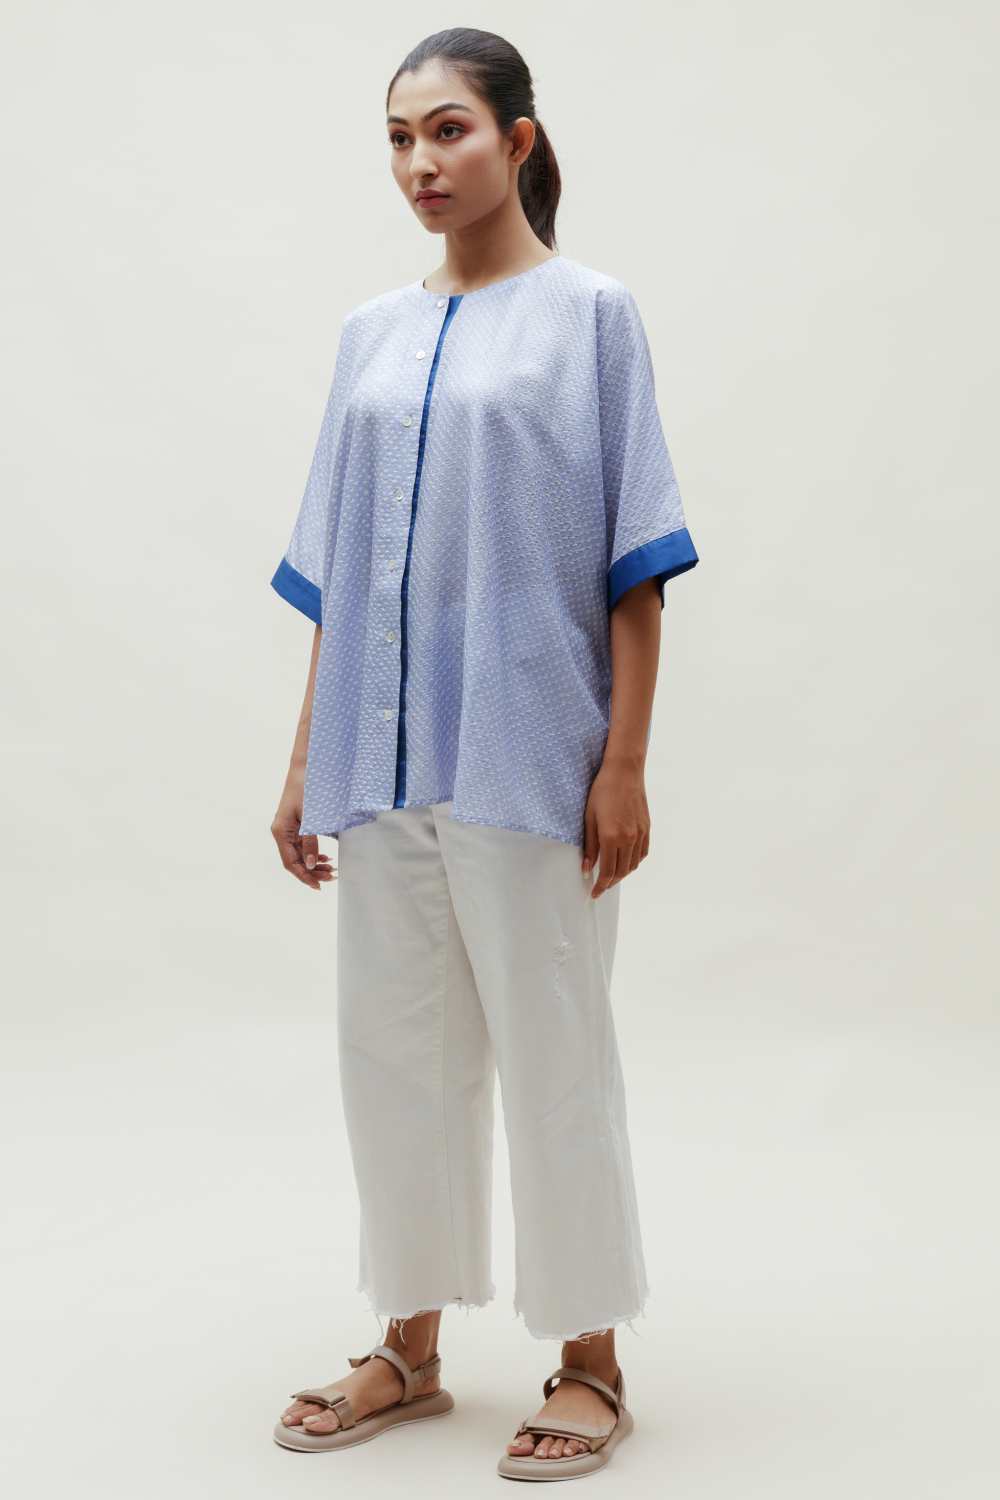 Free Size Bandhani Silk Shirt - Sky Blue